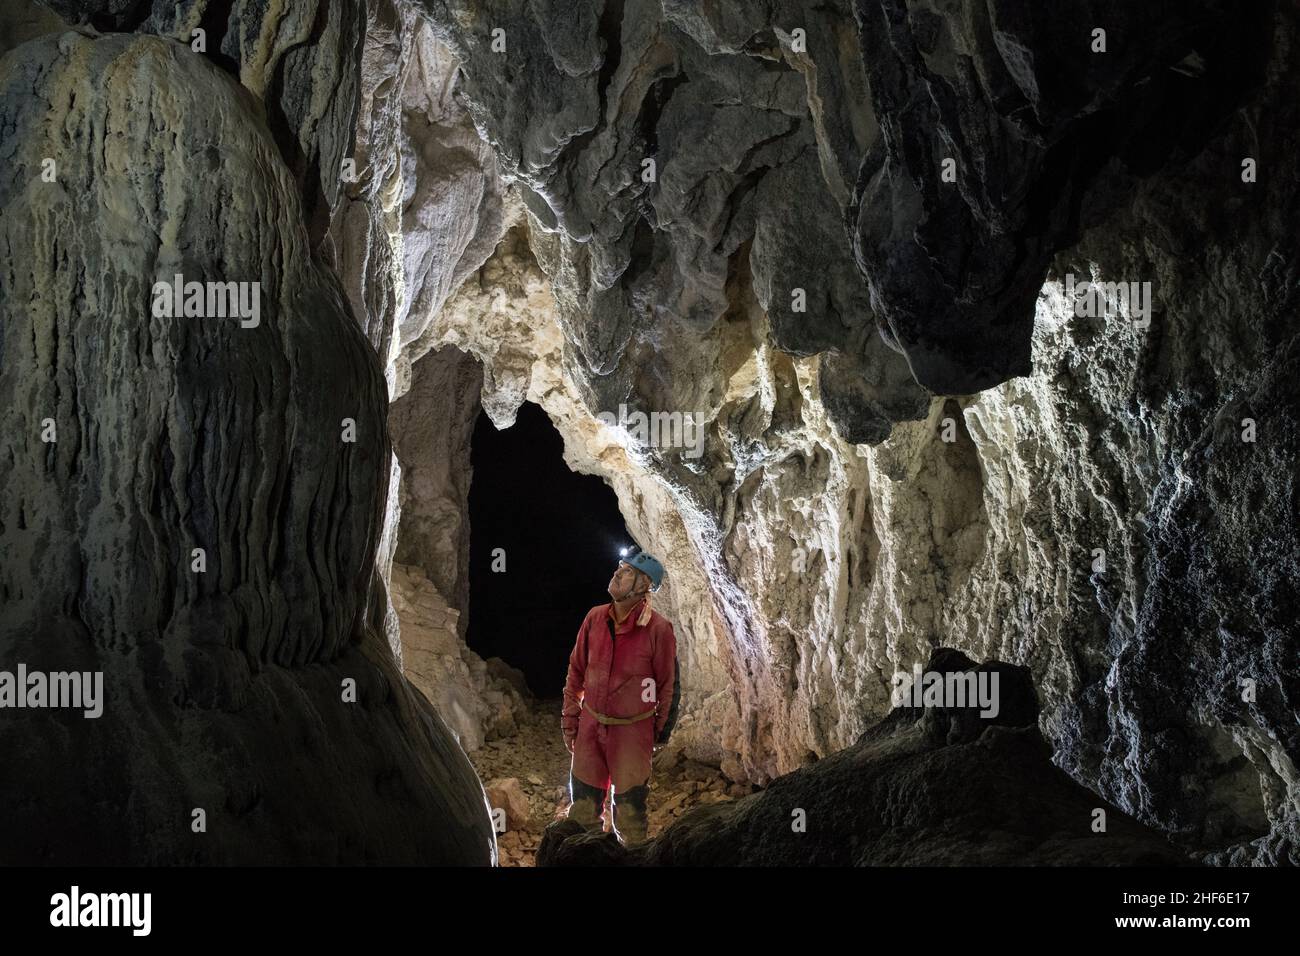 Grotte stalactite en France, Baume Archee Banque D'Images